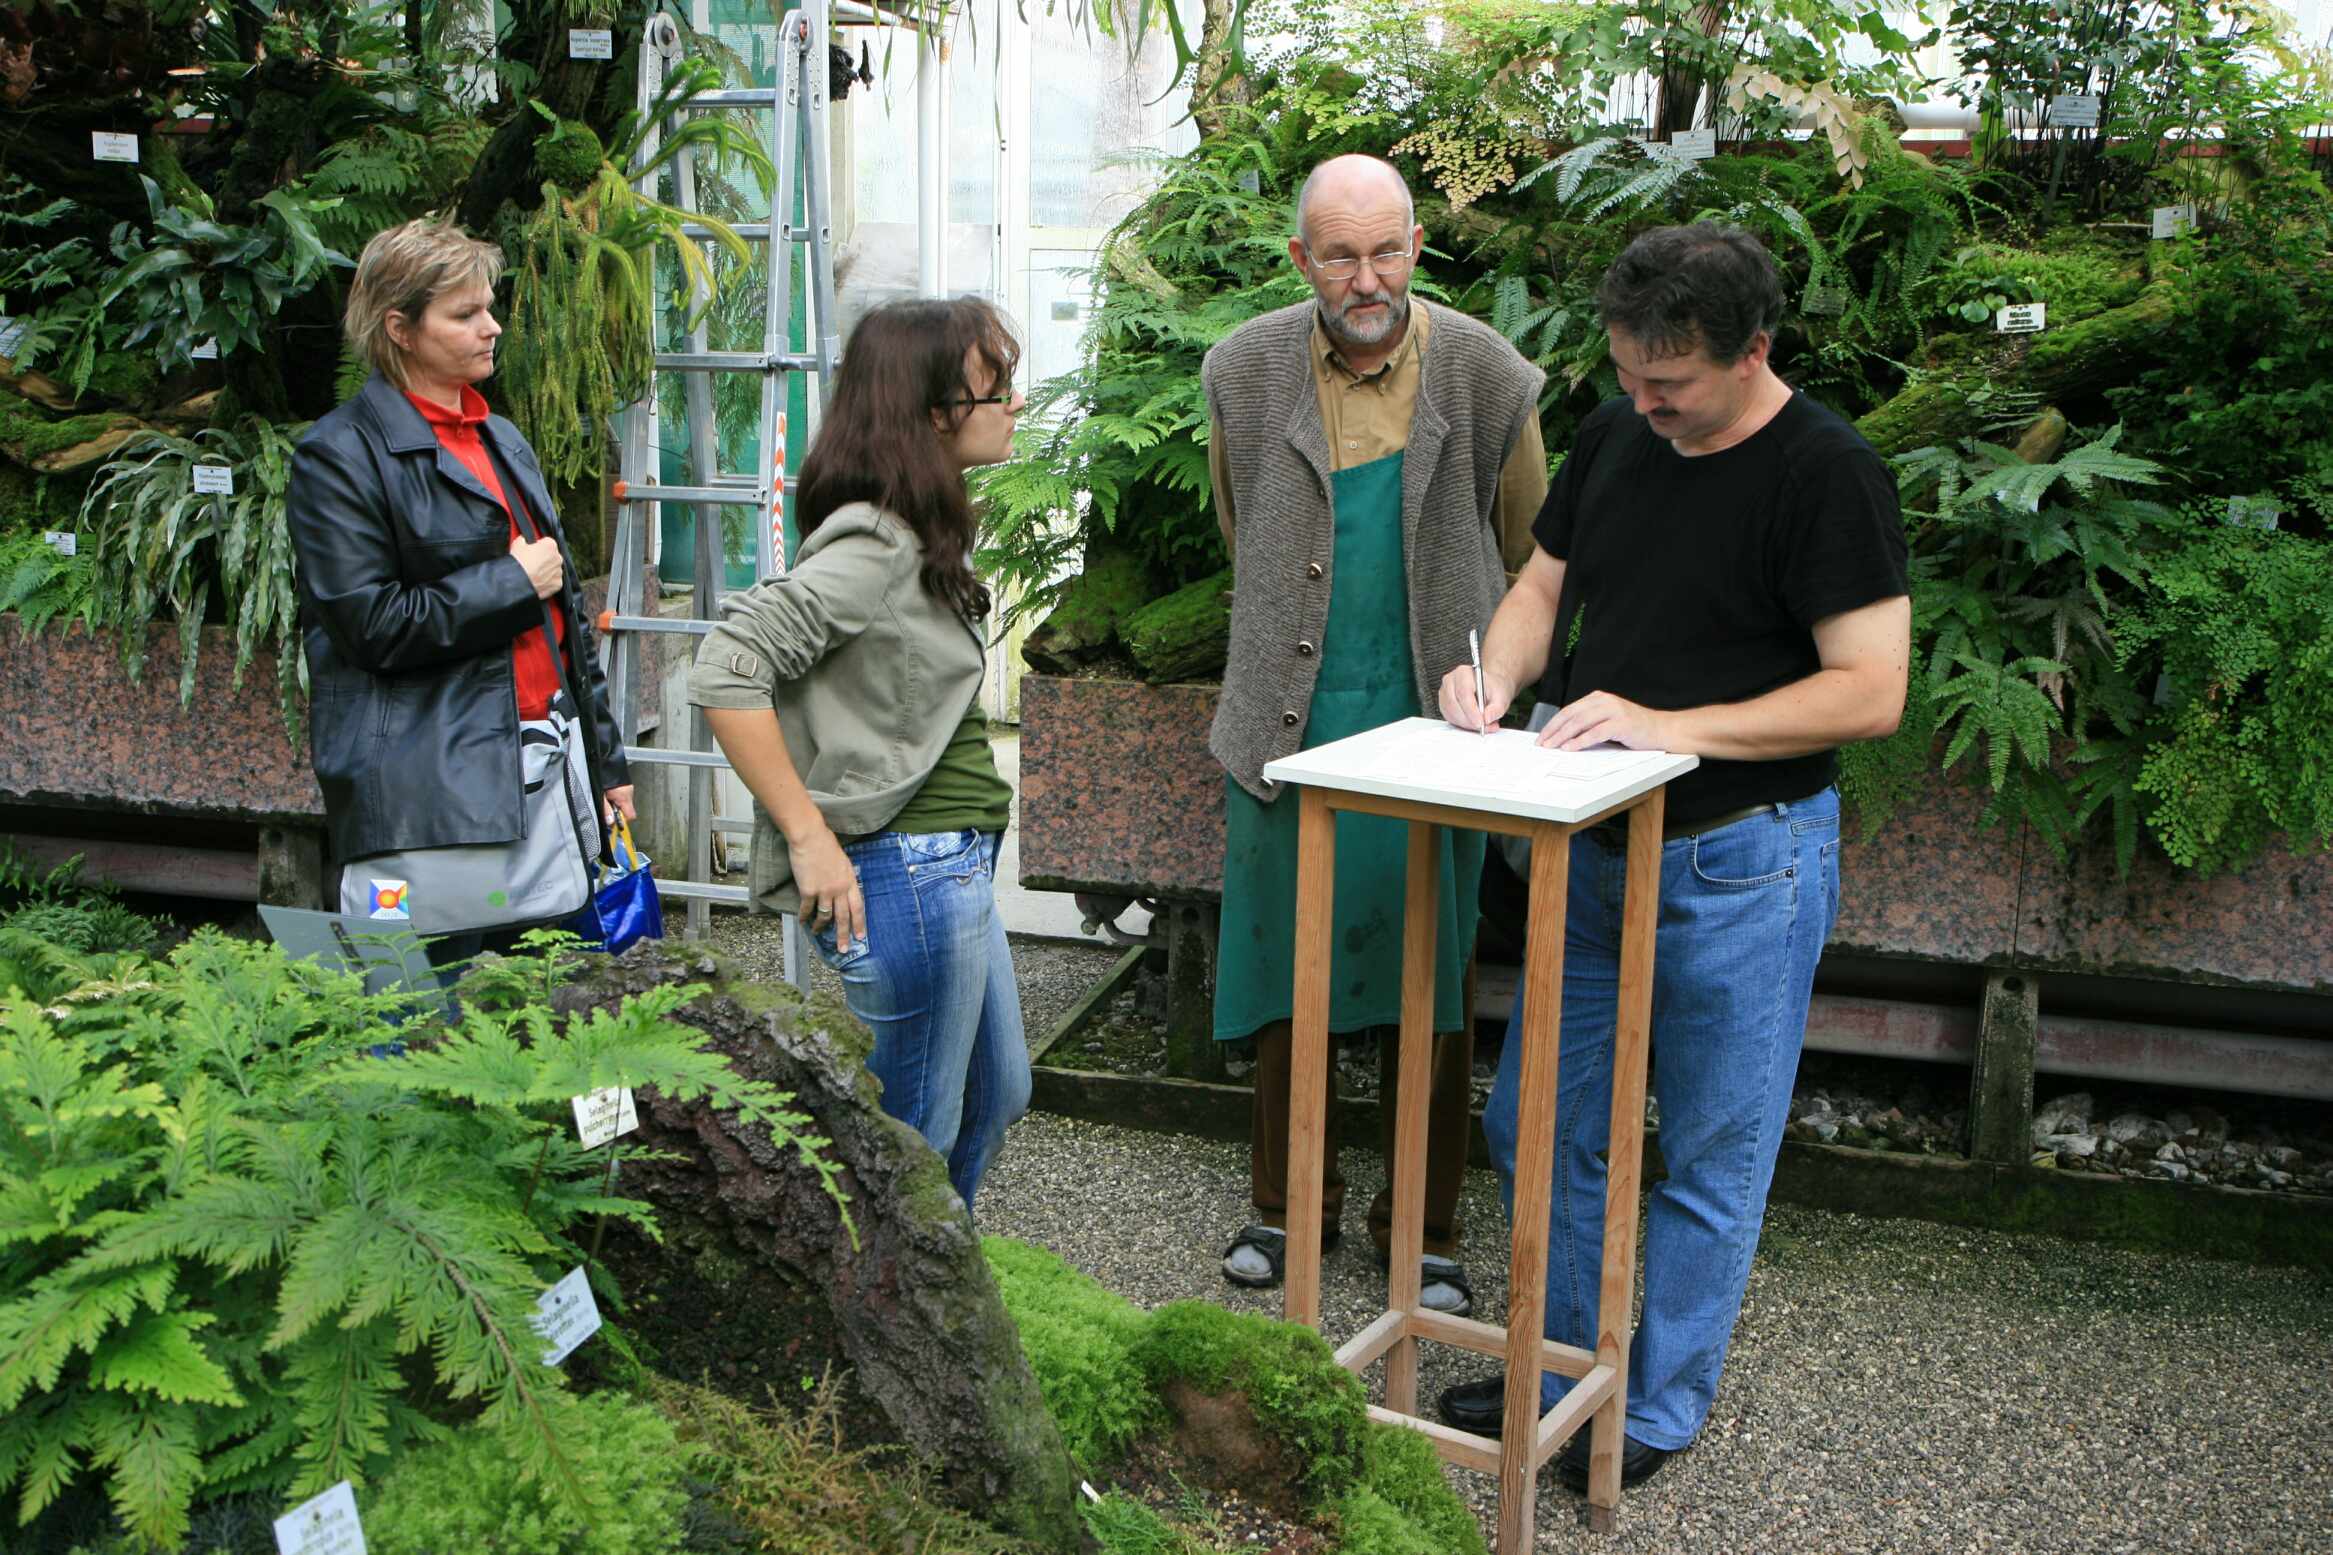 Greenhouse in Munich: Olga Rotreklová, Ivana Hralová, Hermann Esser, Petr Bureš